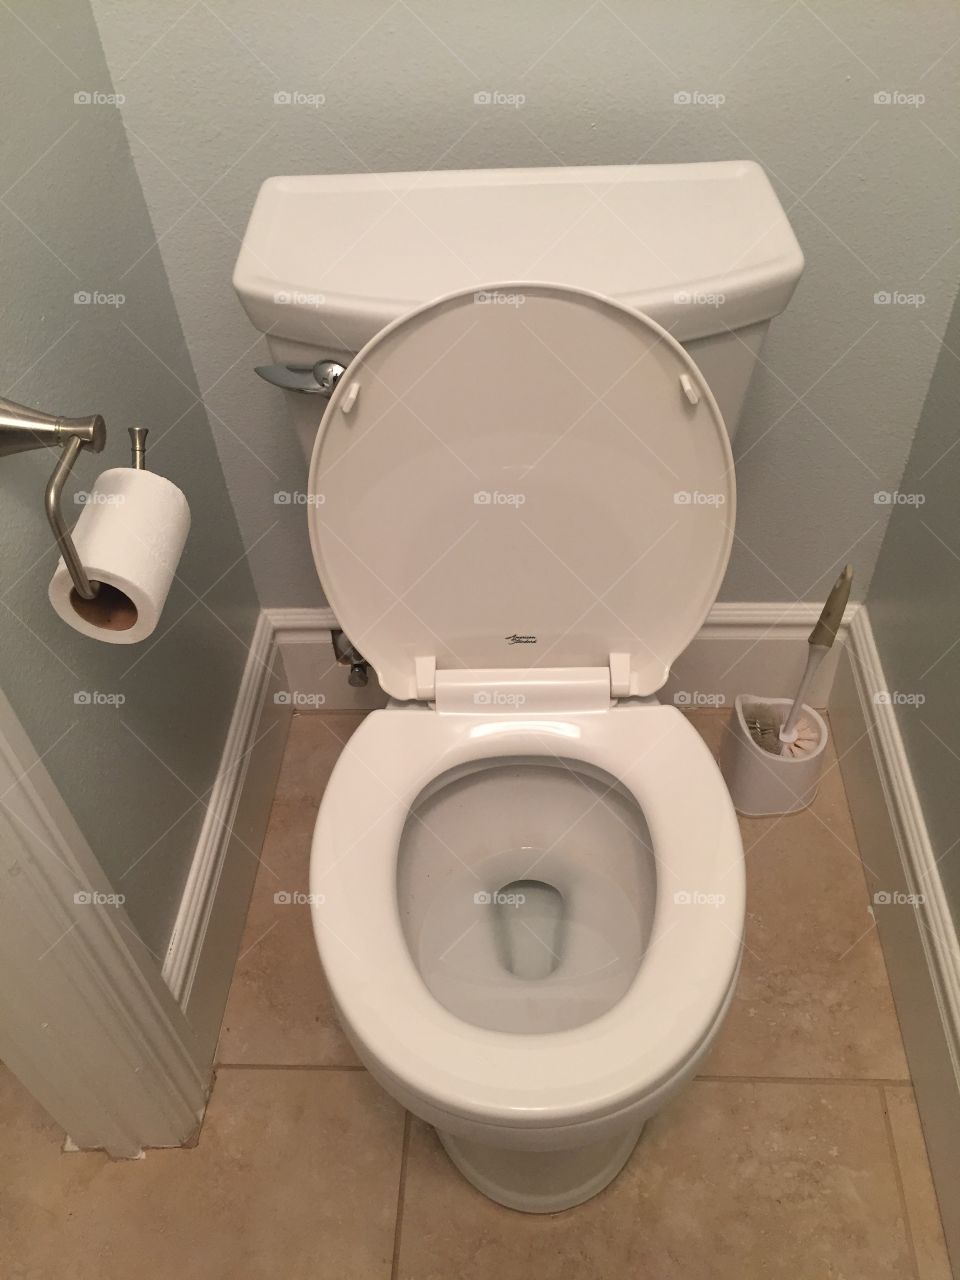 Toilet bathroom. Toilet and paper